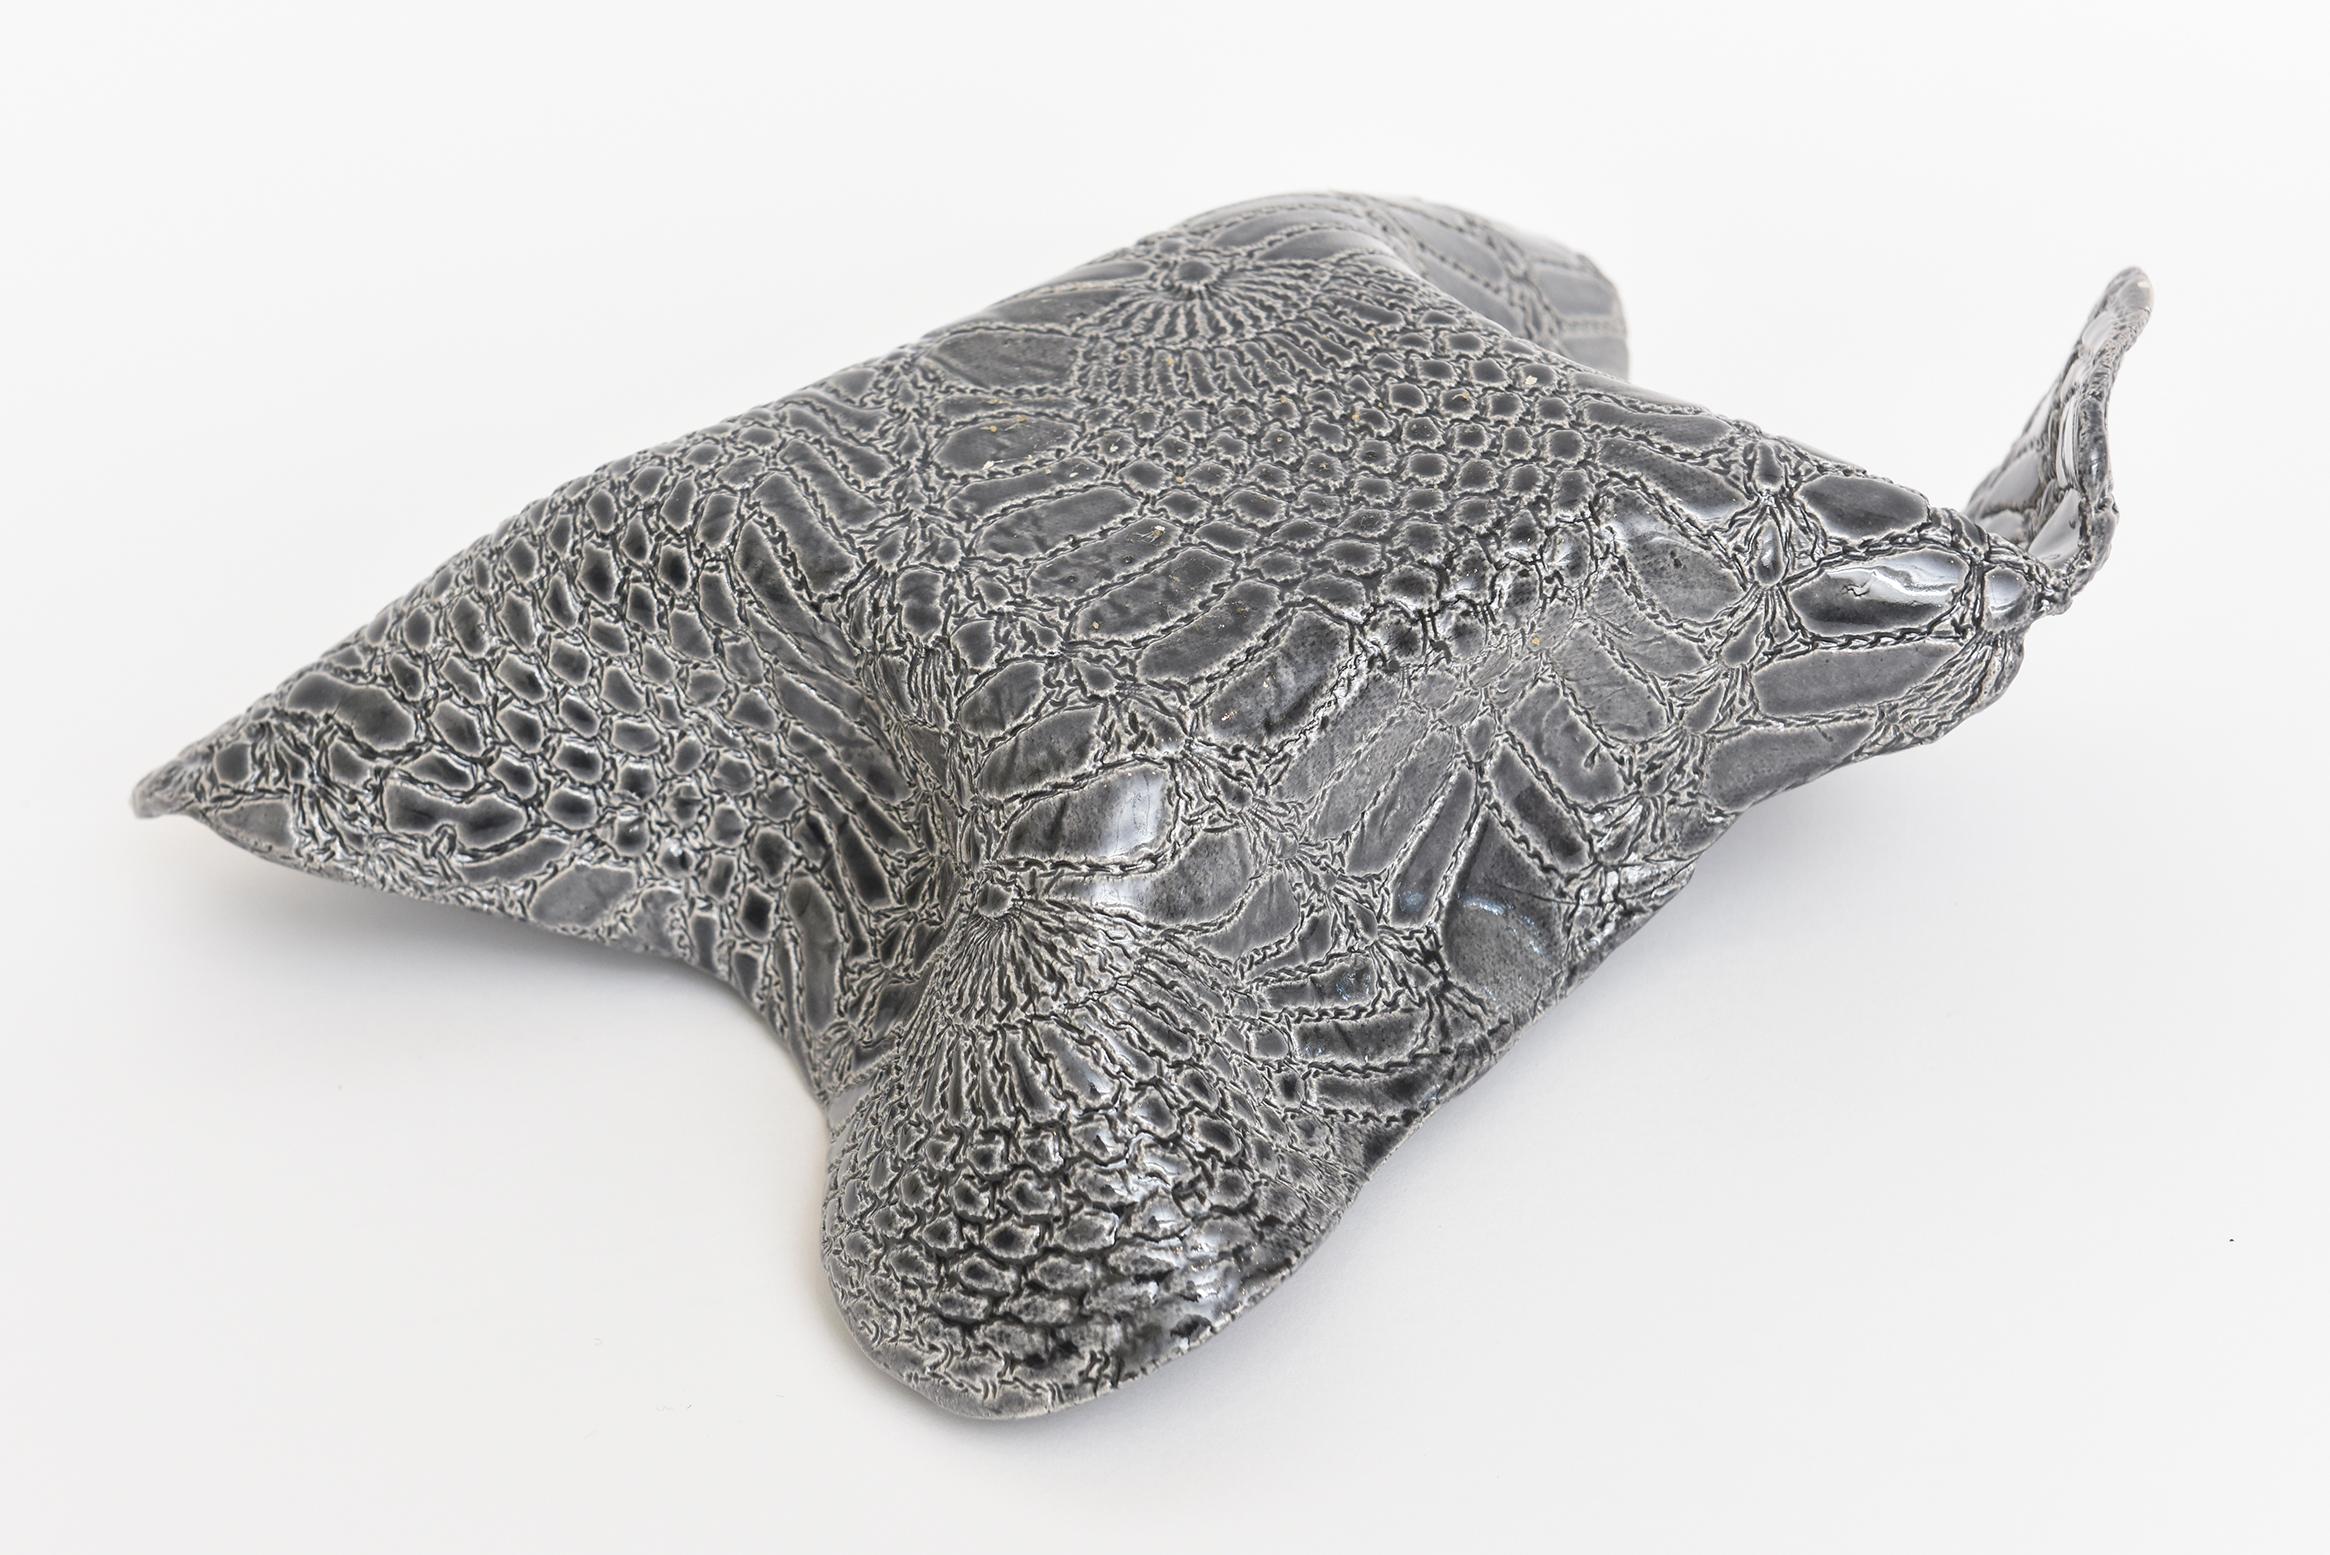 Ceramic Textural Snakeskin Pattern Grey White Biomorphic Sculptural Bowl For Sale 6